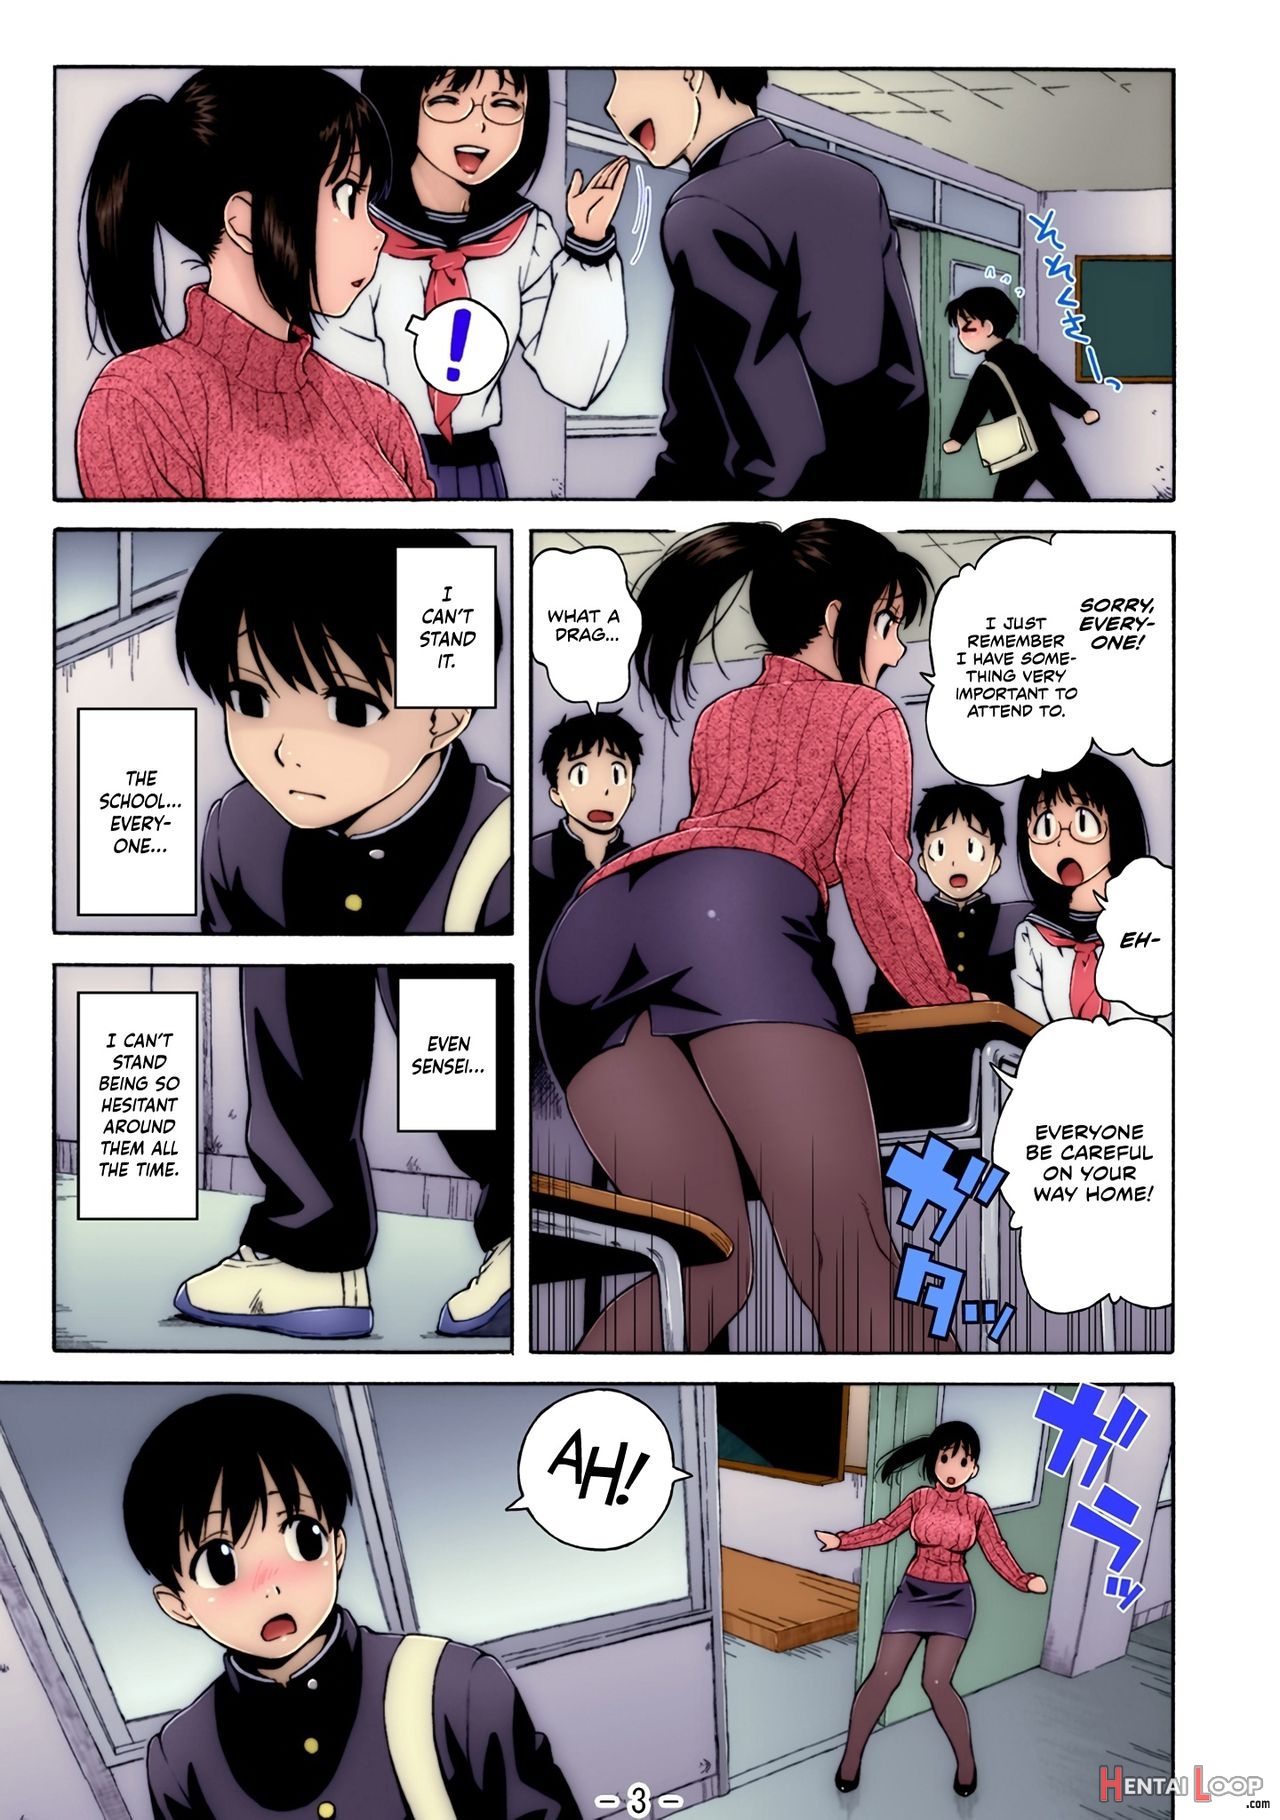 Nonstop! Inukai-kun - Colorized page 3